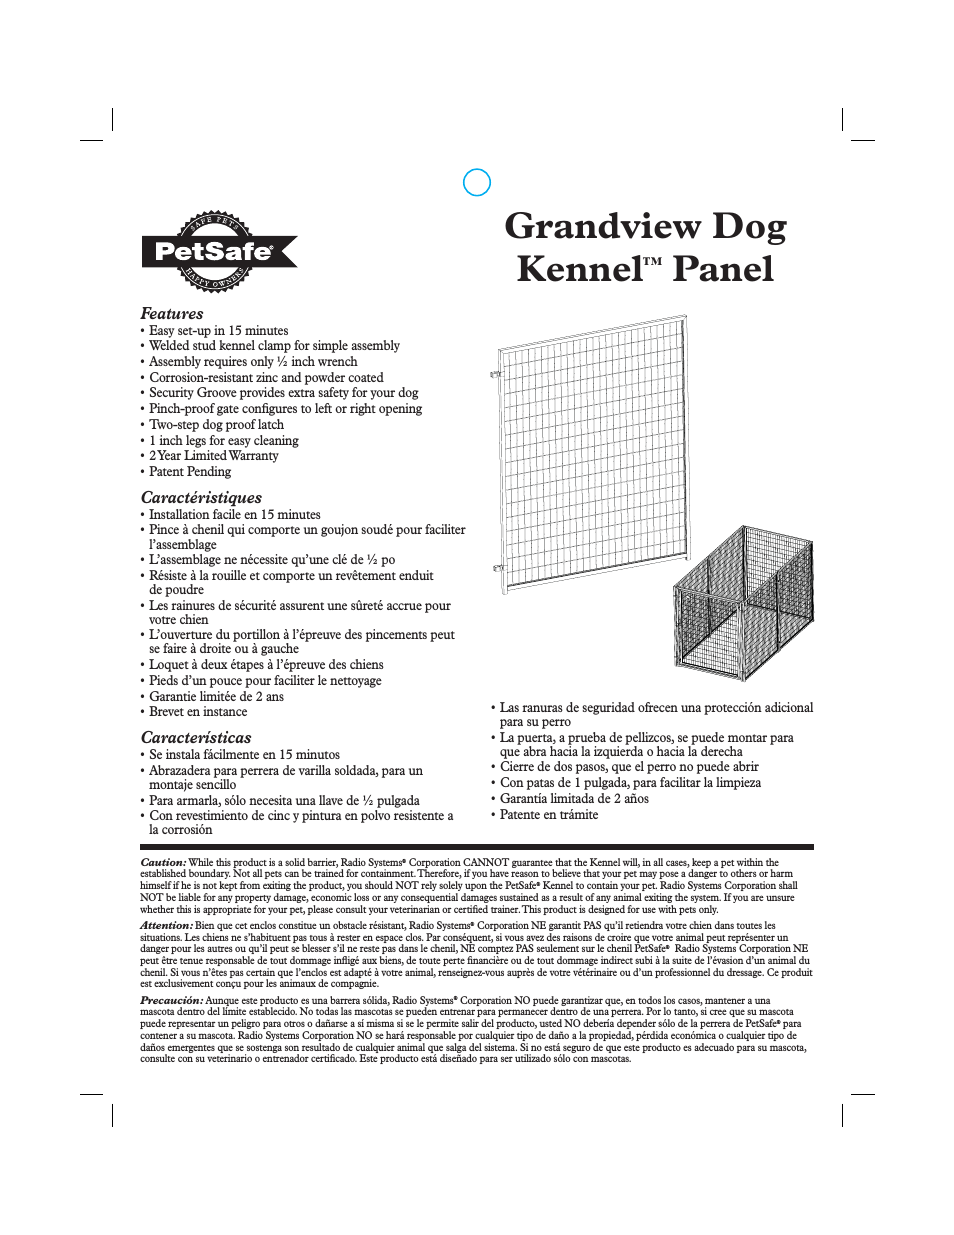 Grandview Dog Kennel Panel